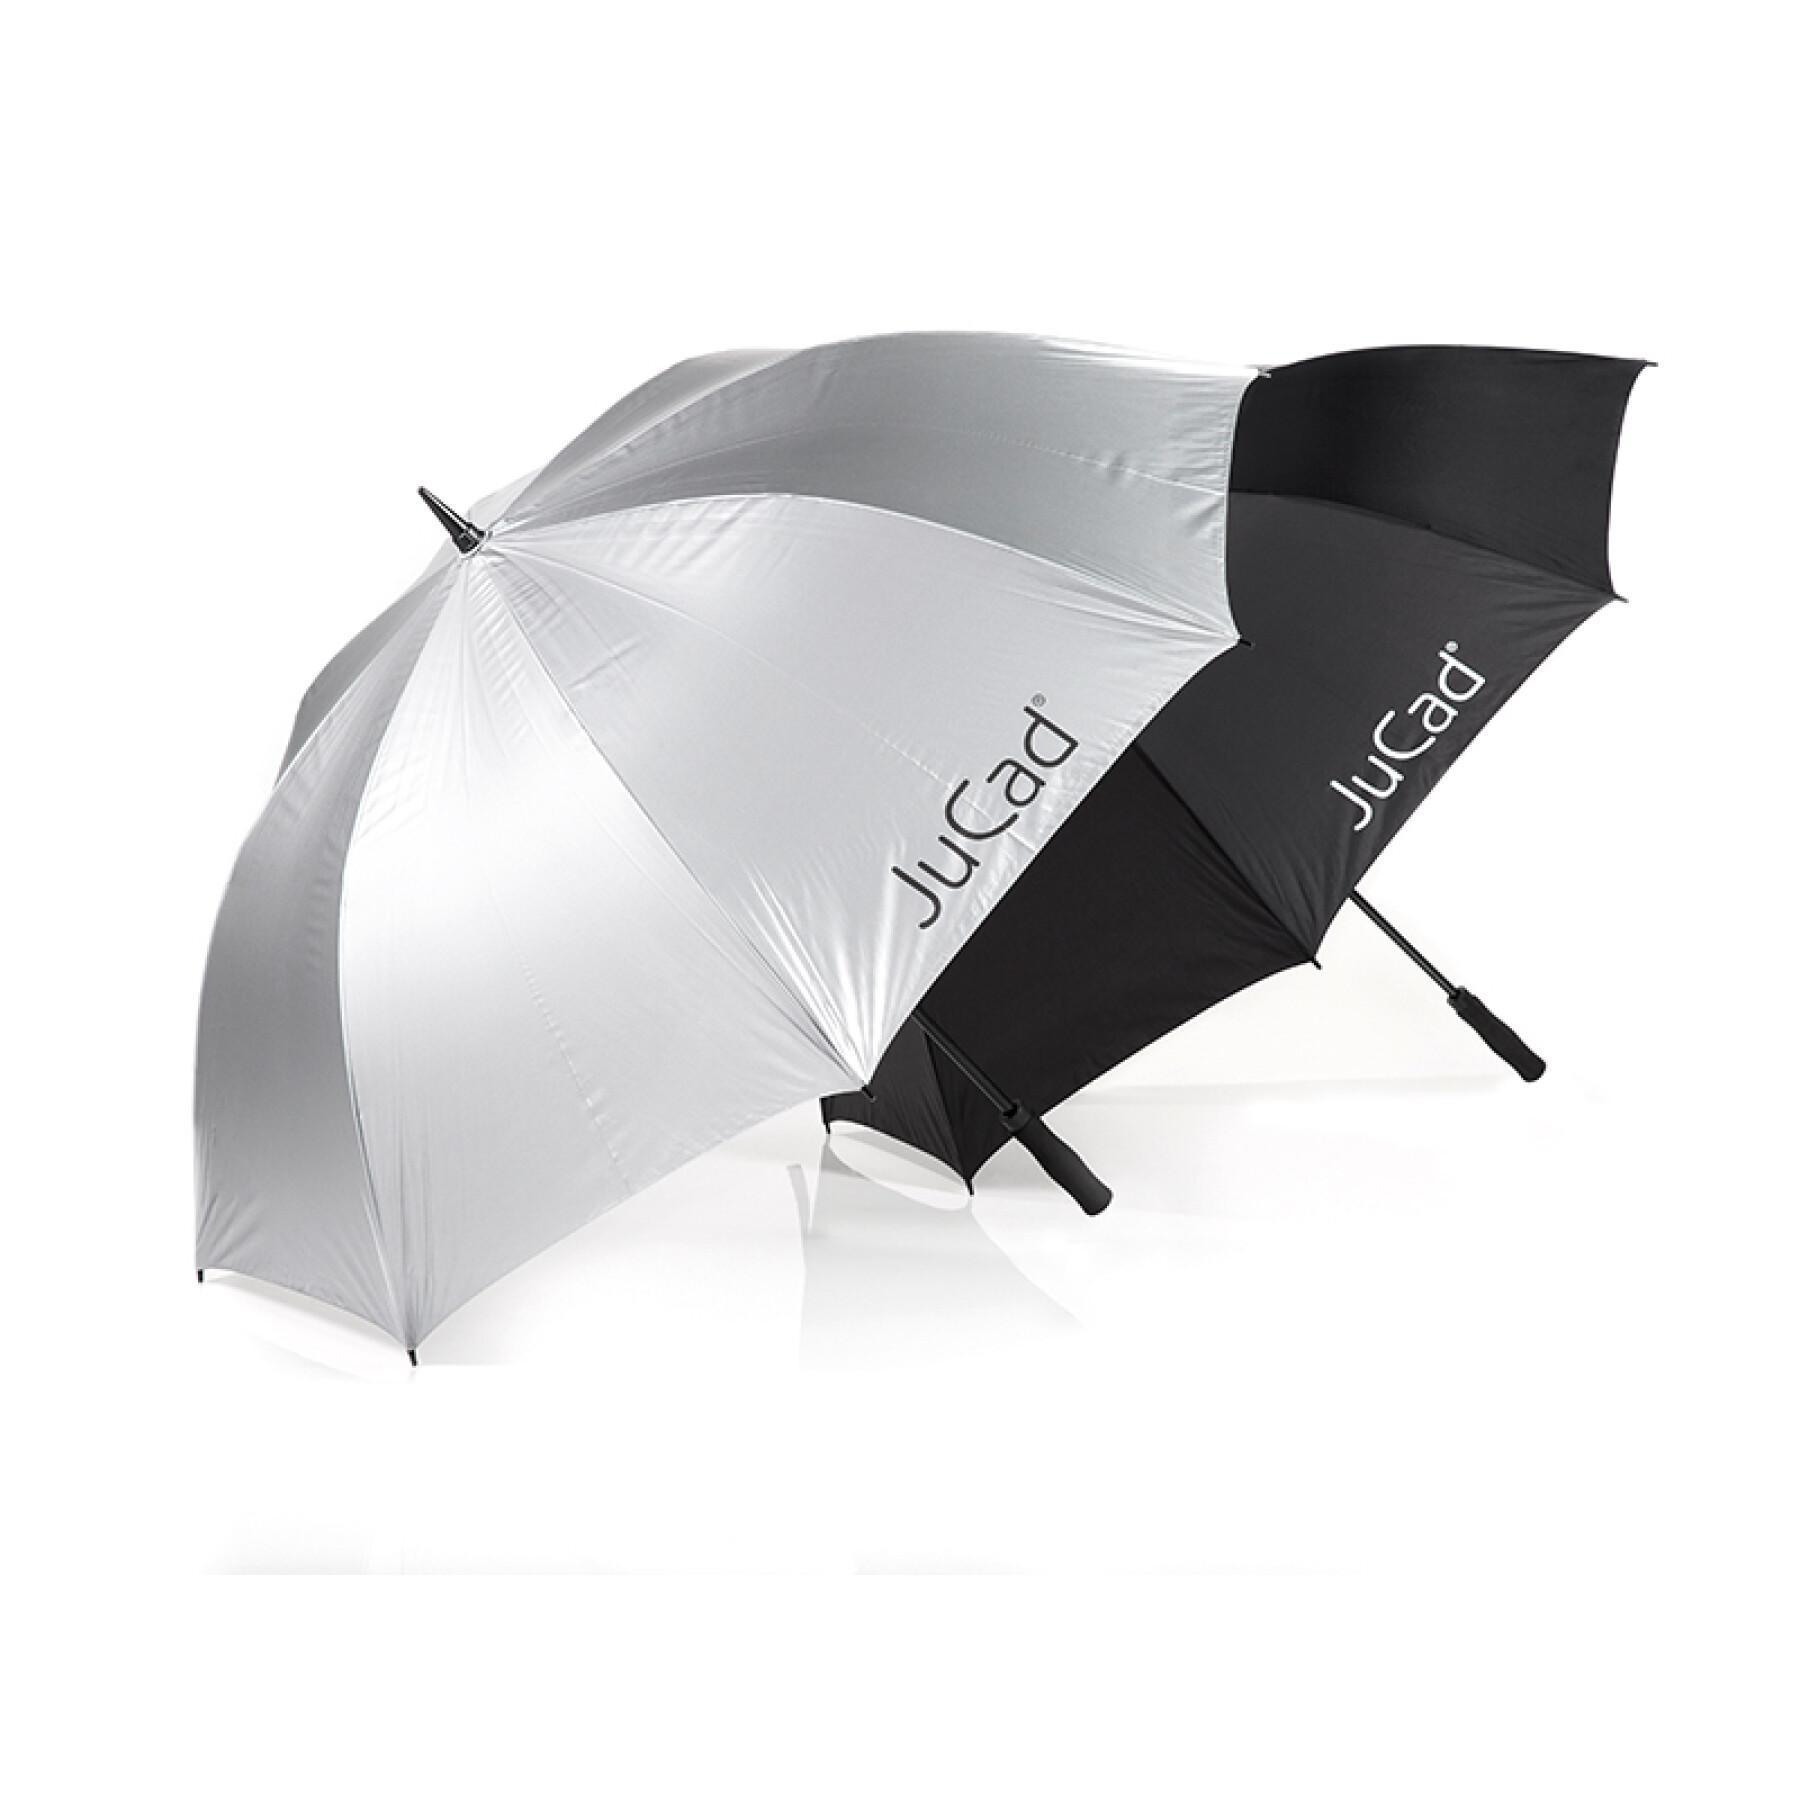 Extra-large and ultra-light automatic customizable umbrella Jucad